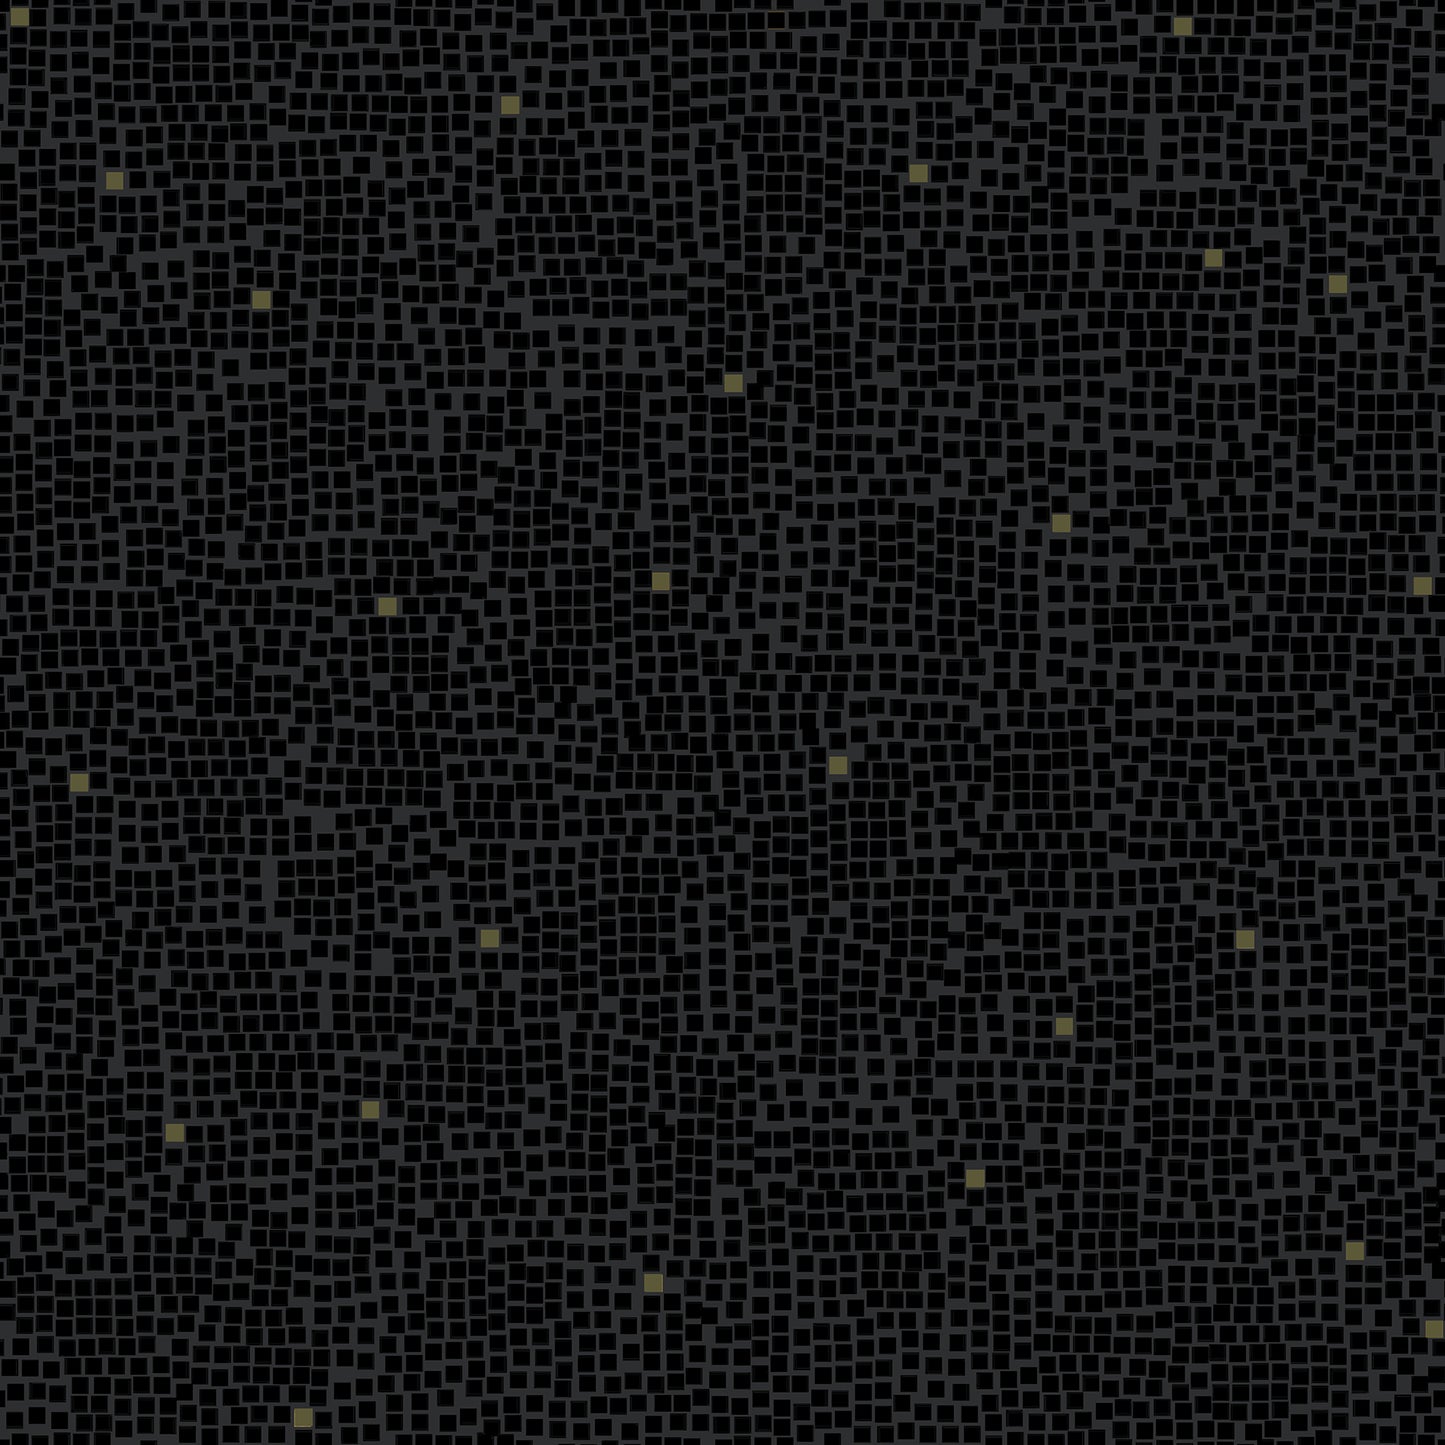 Pixel On Black Quilting Cotton